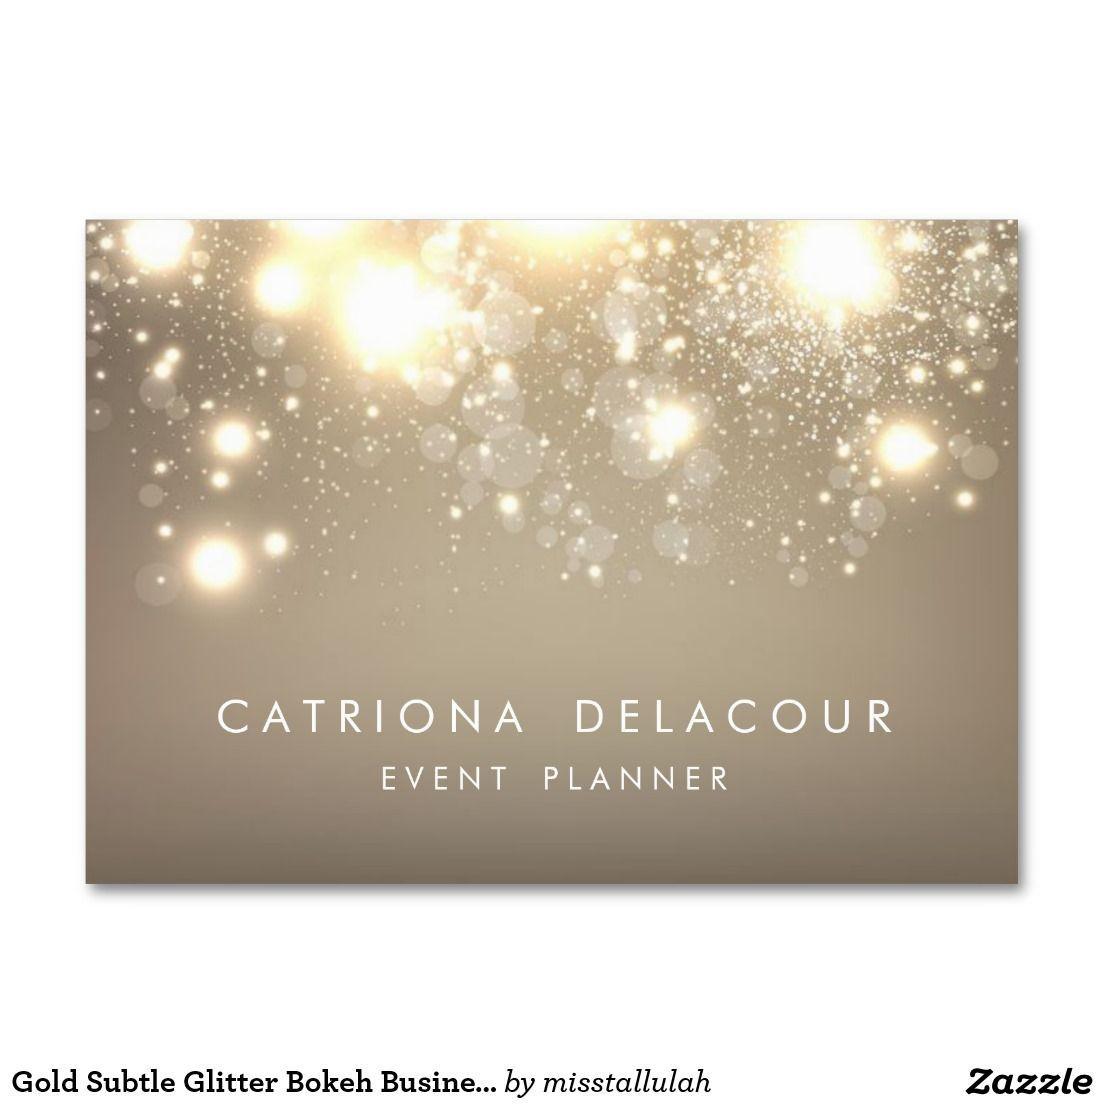 Subtle Glitter Logo - Gold Subtle Glitter Bokeh Business Card. Chubby. BIG HIT